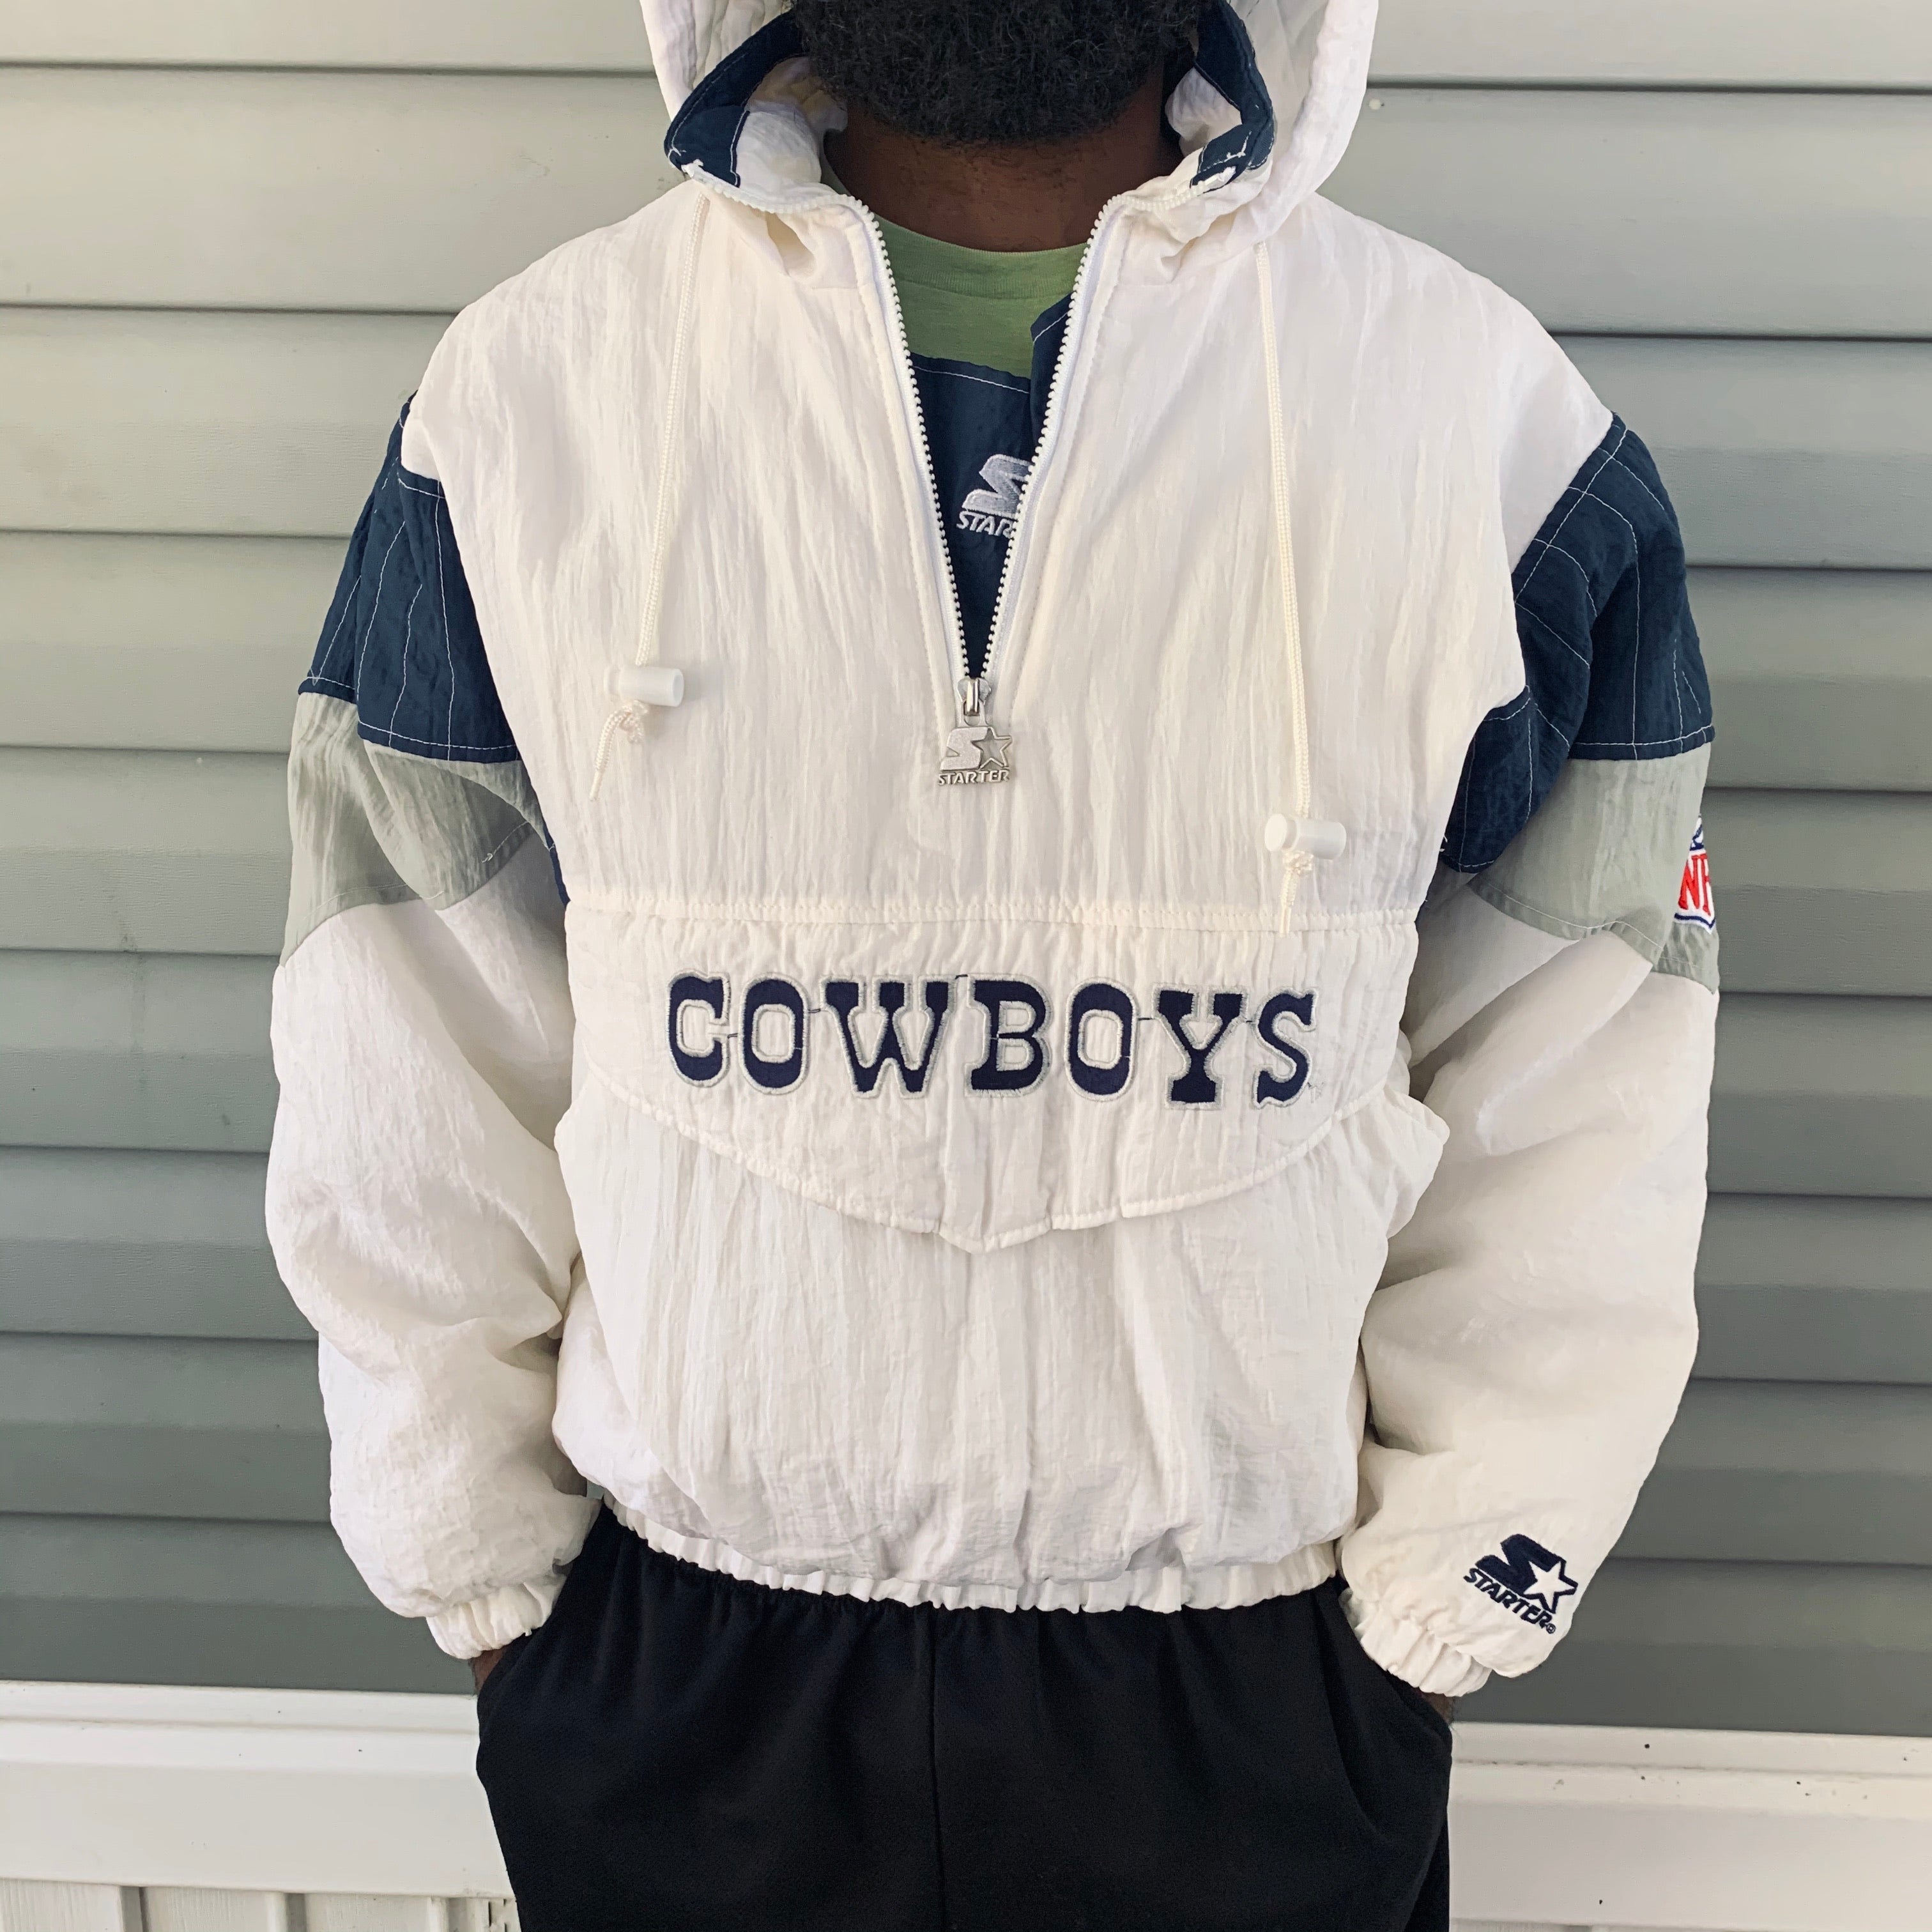 90s cowboys starter jacket